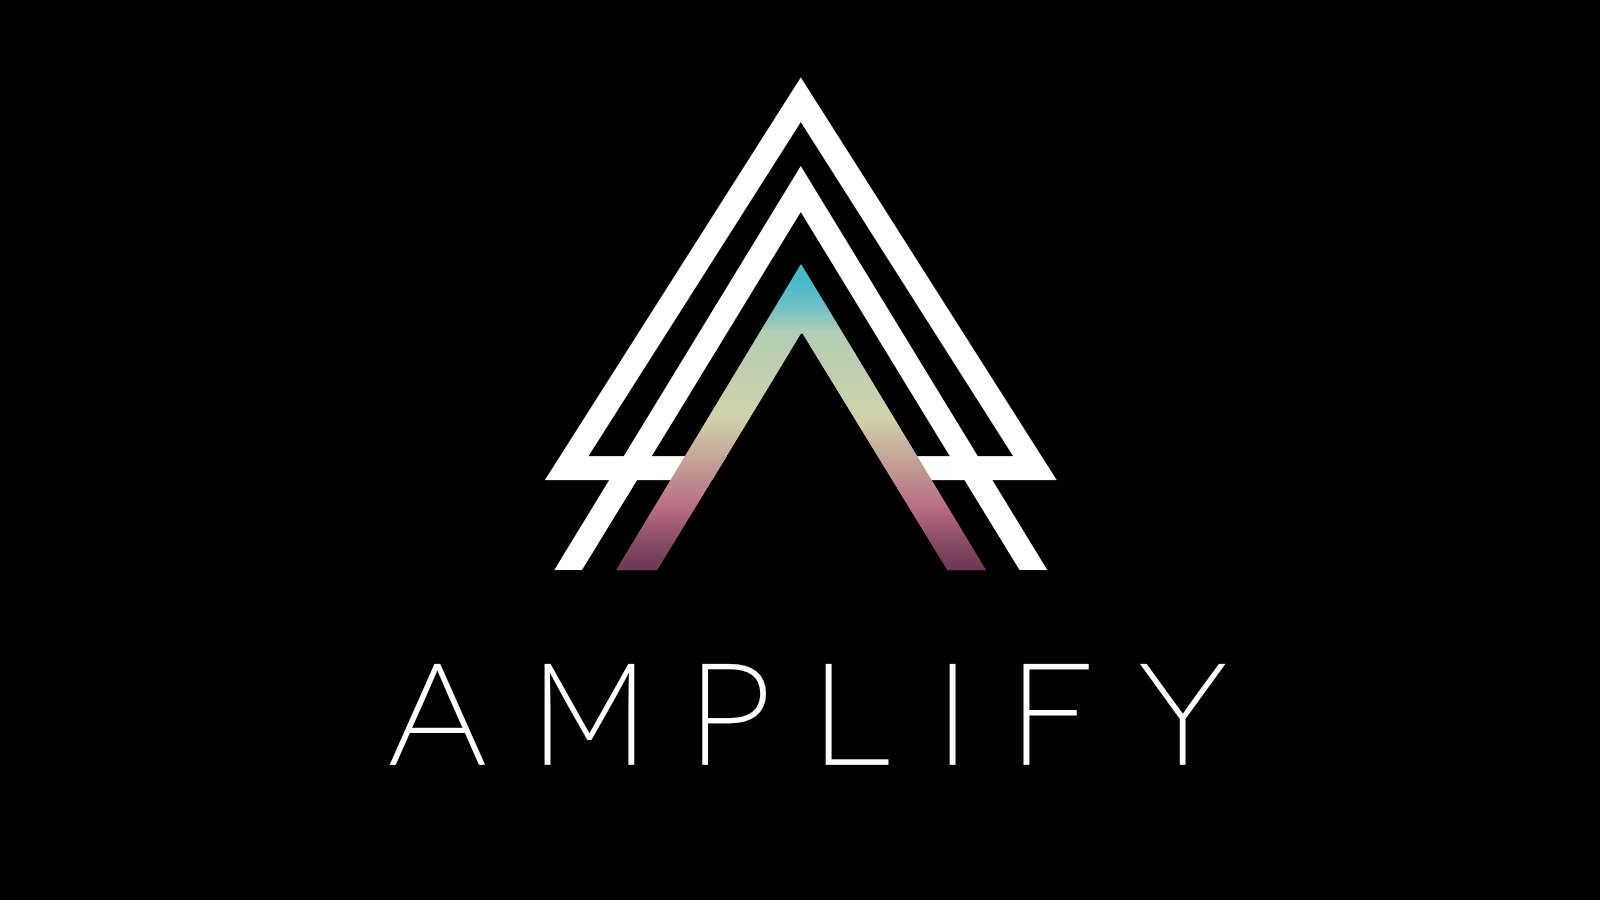 Amplify Logo.png